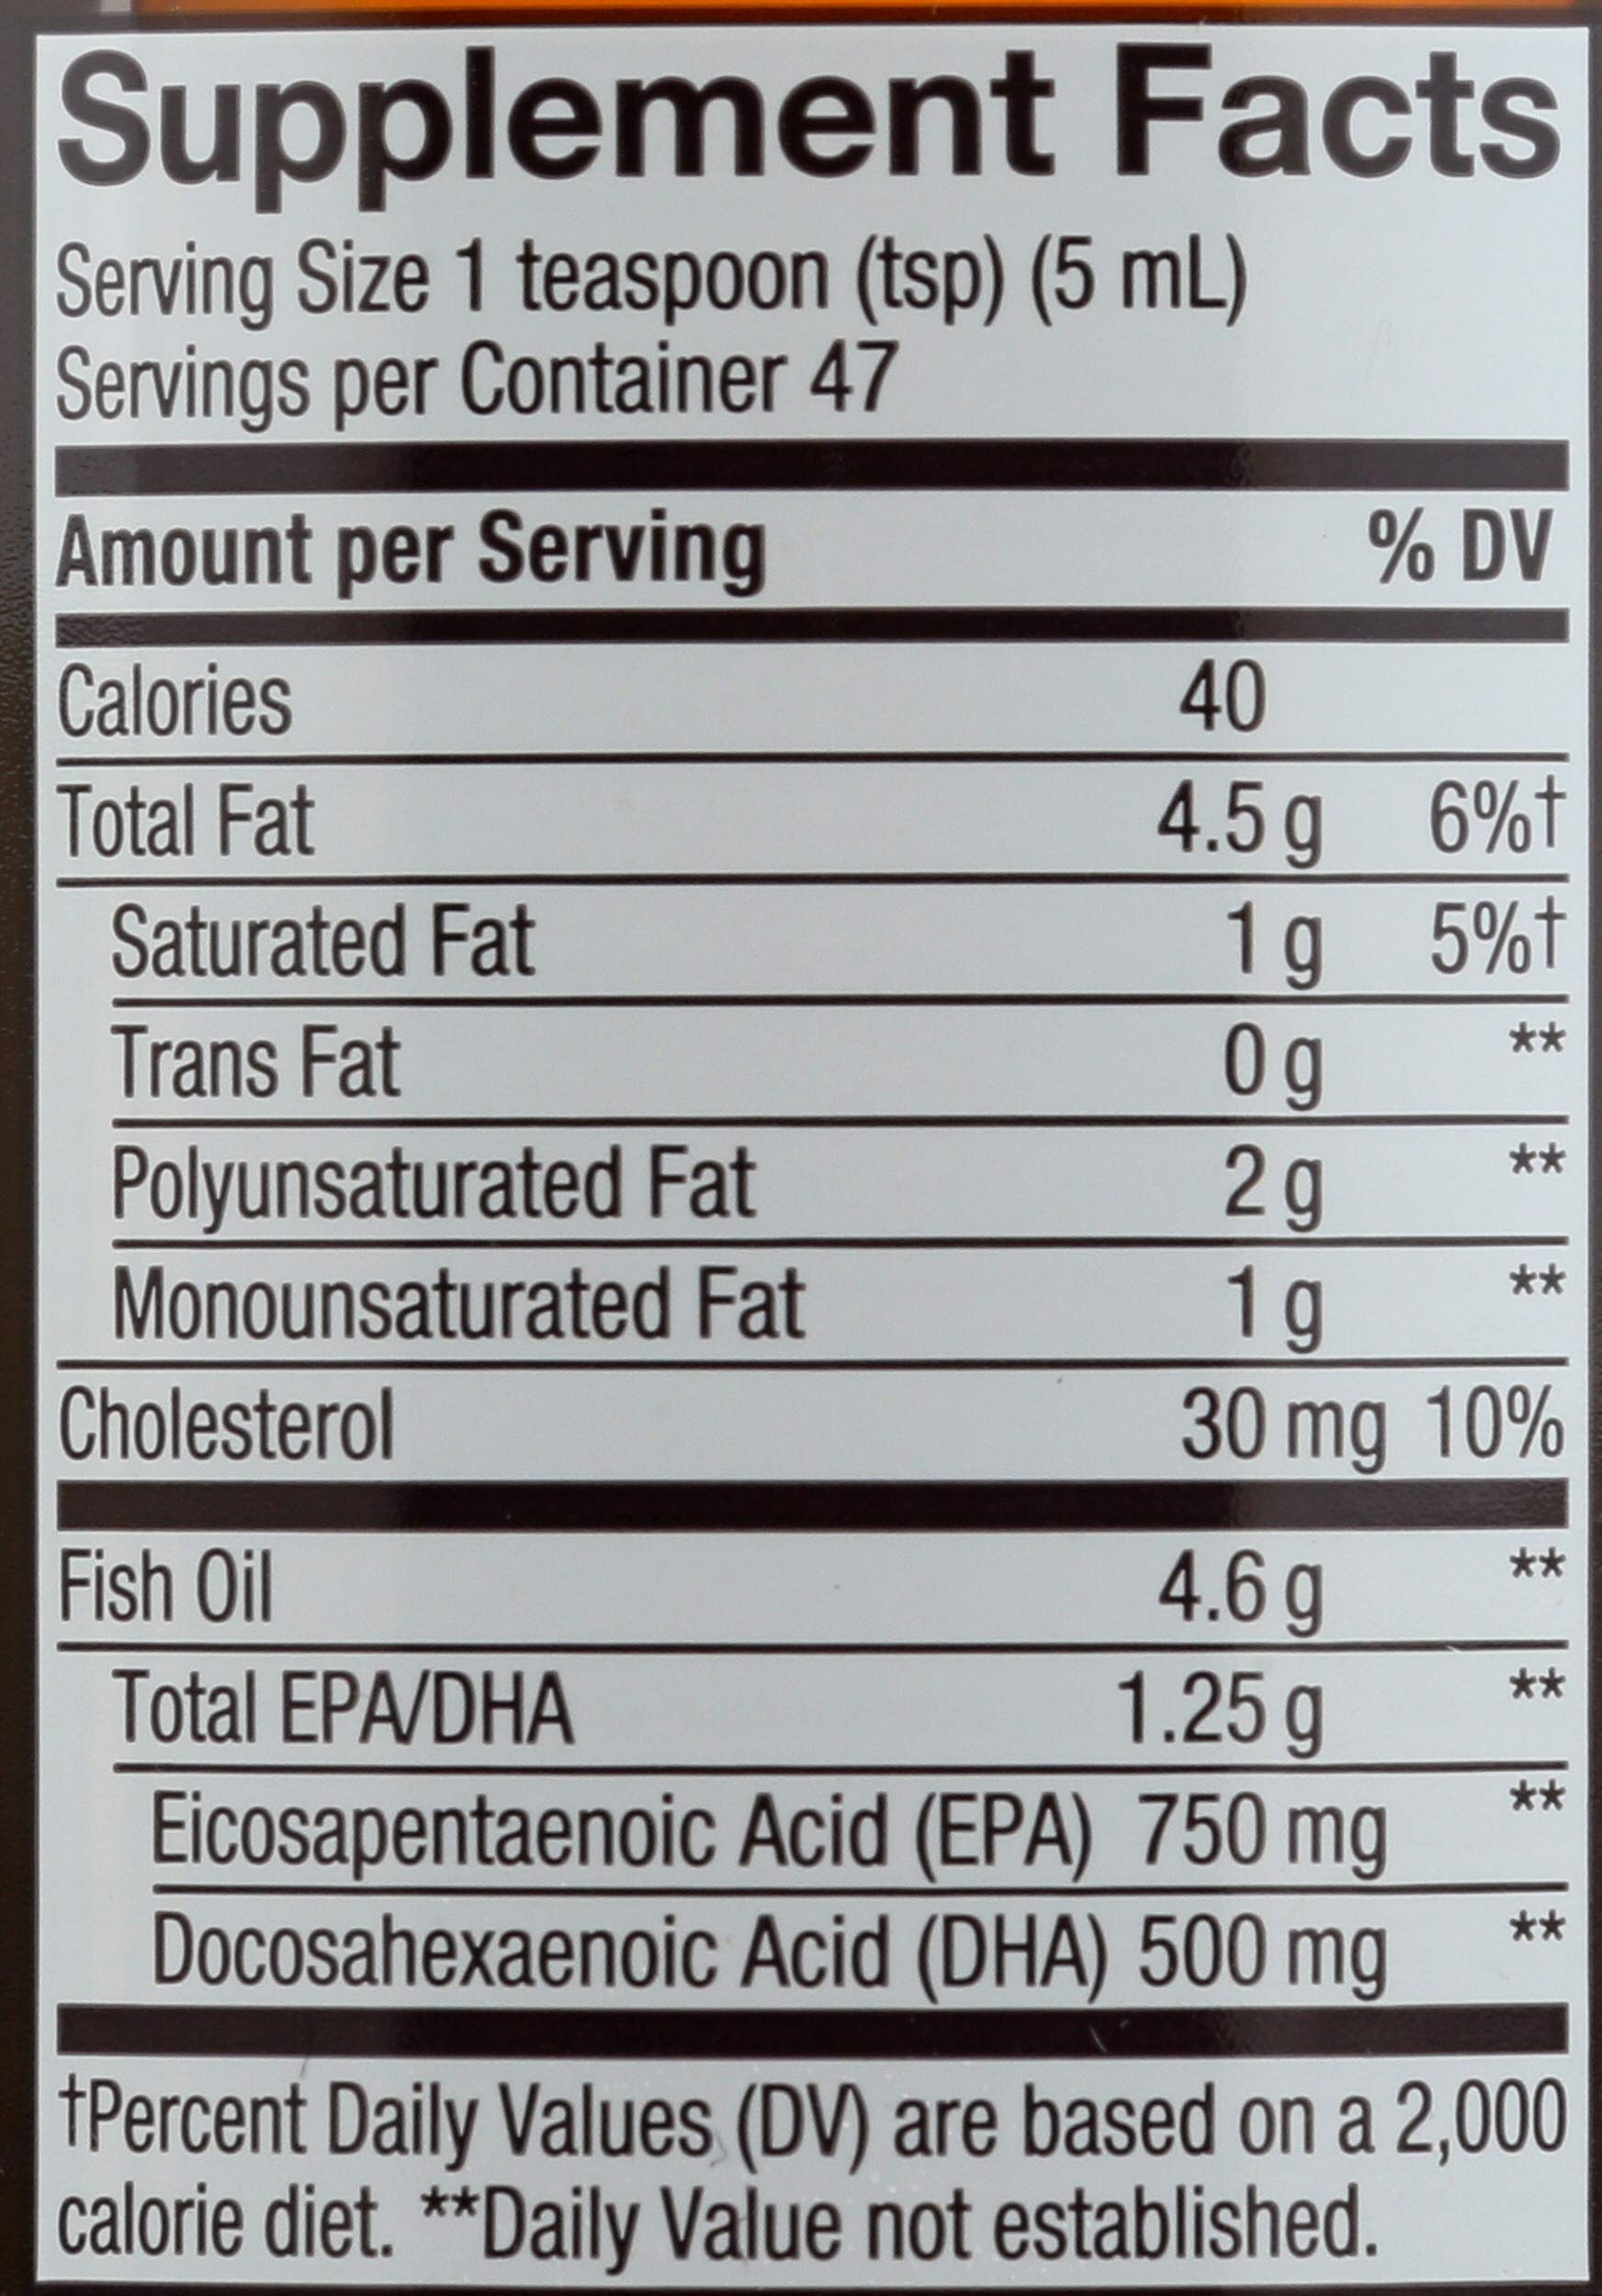 Nature’s Way Ultra Pure Omega3 Liquid Fish Oil Supplement, Grapefruit Tangerine Flavor, 8 Fl Oz